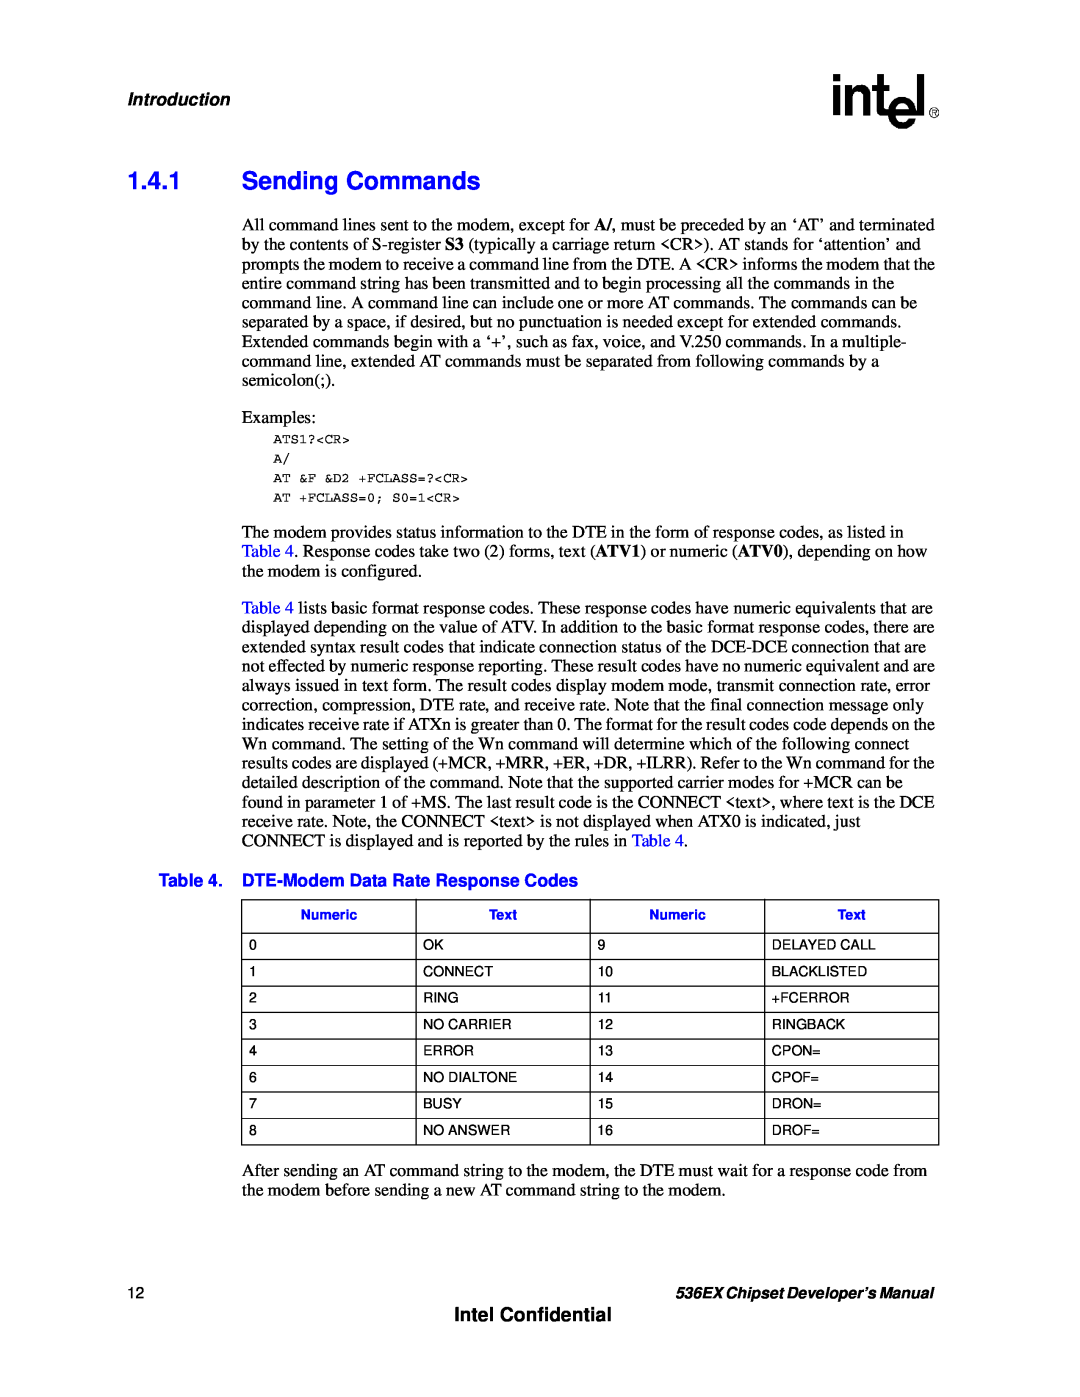 Intel 536EX manual 1.4.1Sending Commands, Intel Confidential, Introduction, DTE-ModemData Rate Response Codes 